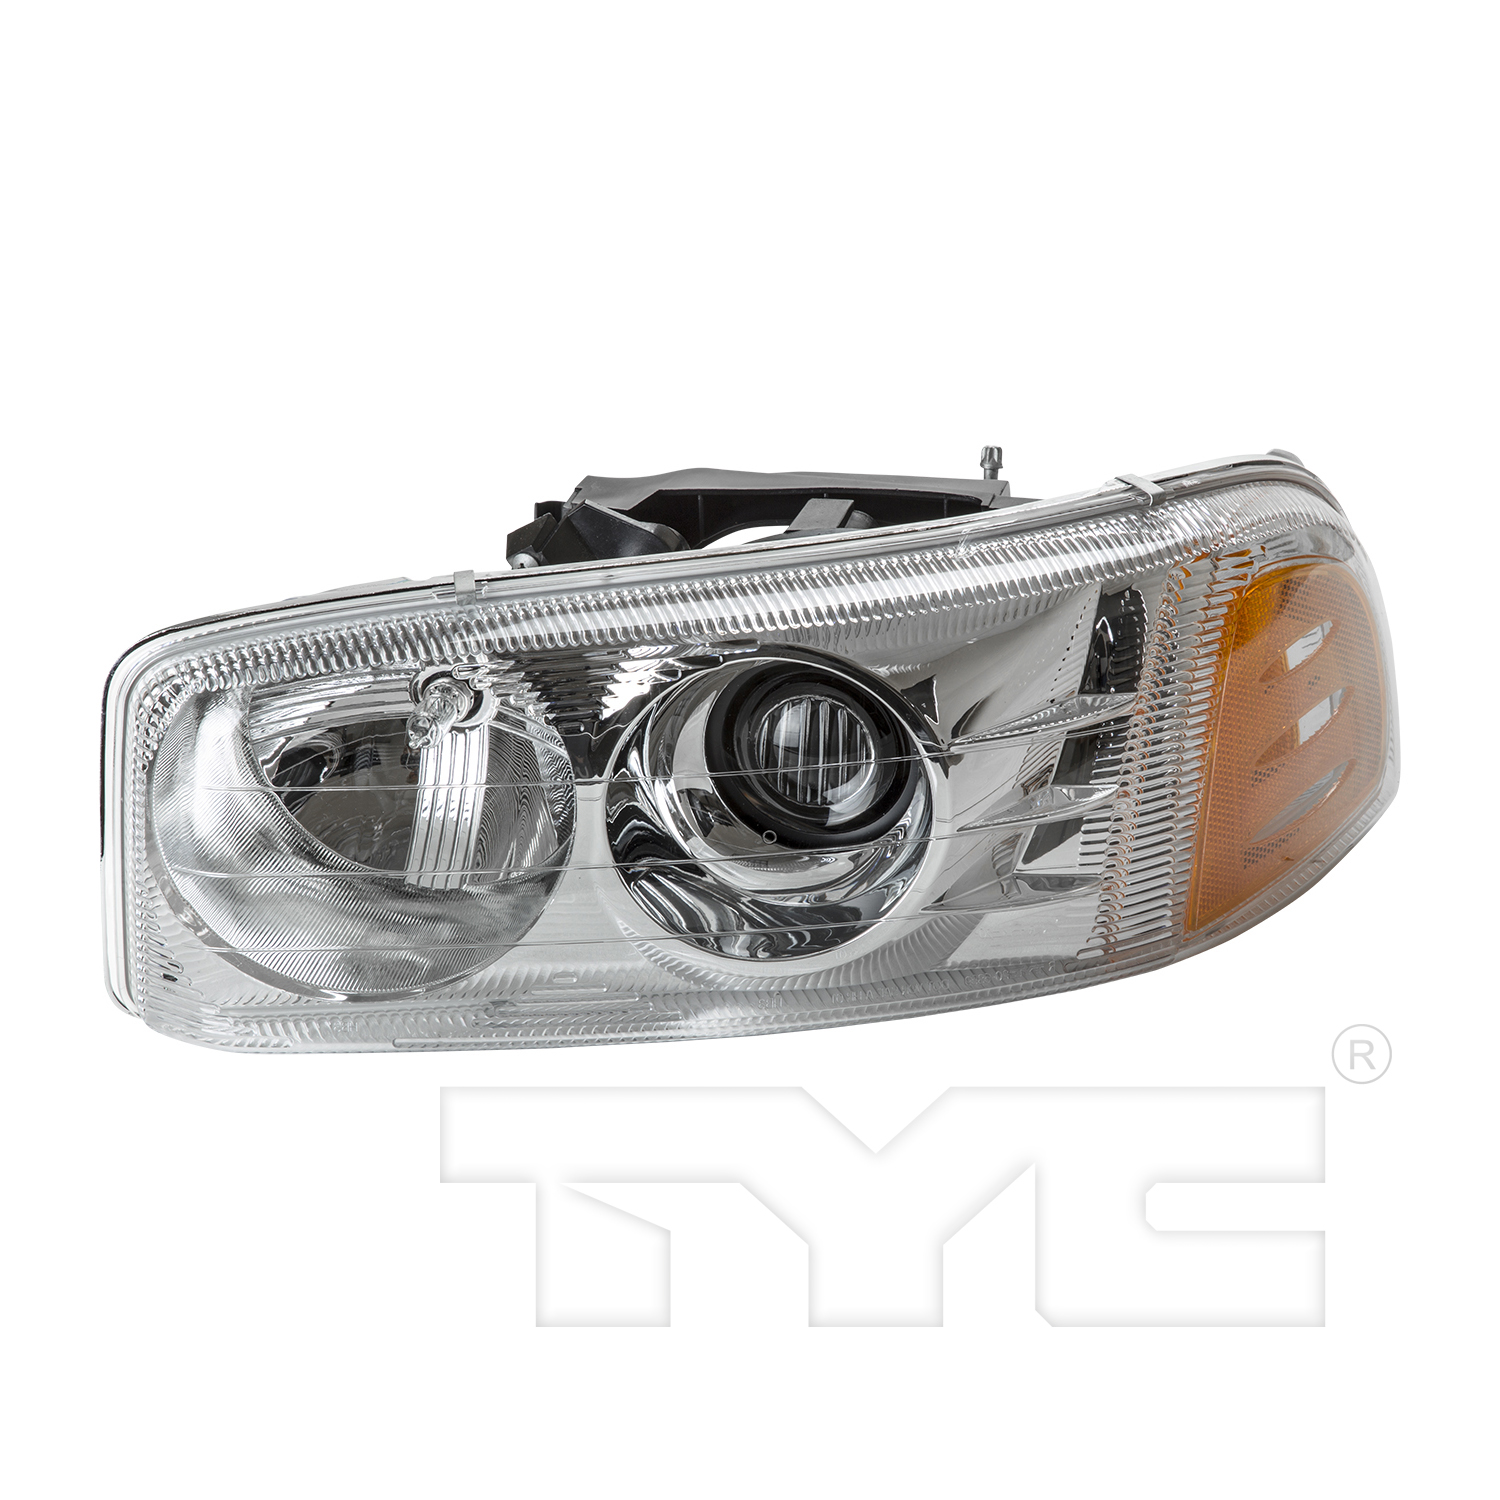 Aftermarket HEADLIGHTS for GMC - YUKON XL 1500, YUKON XL 1500,01-06,LT Headlamp assy composite